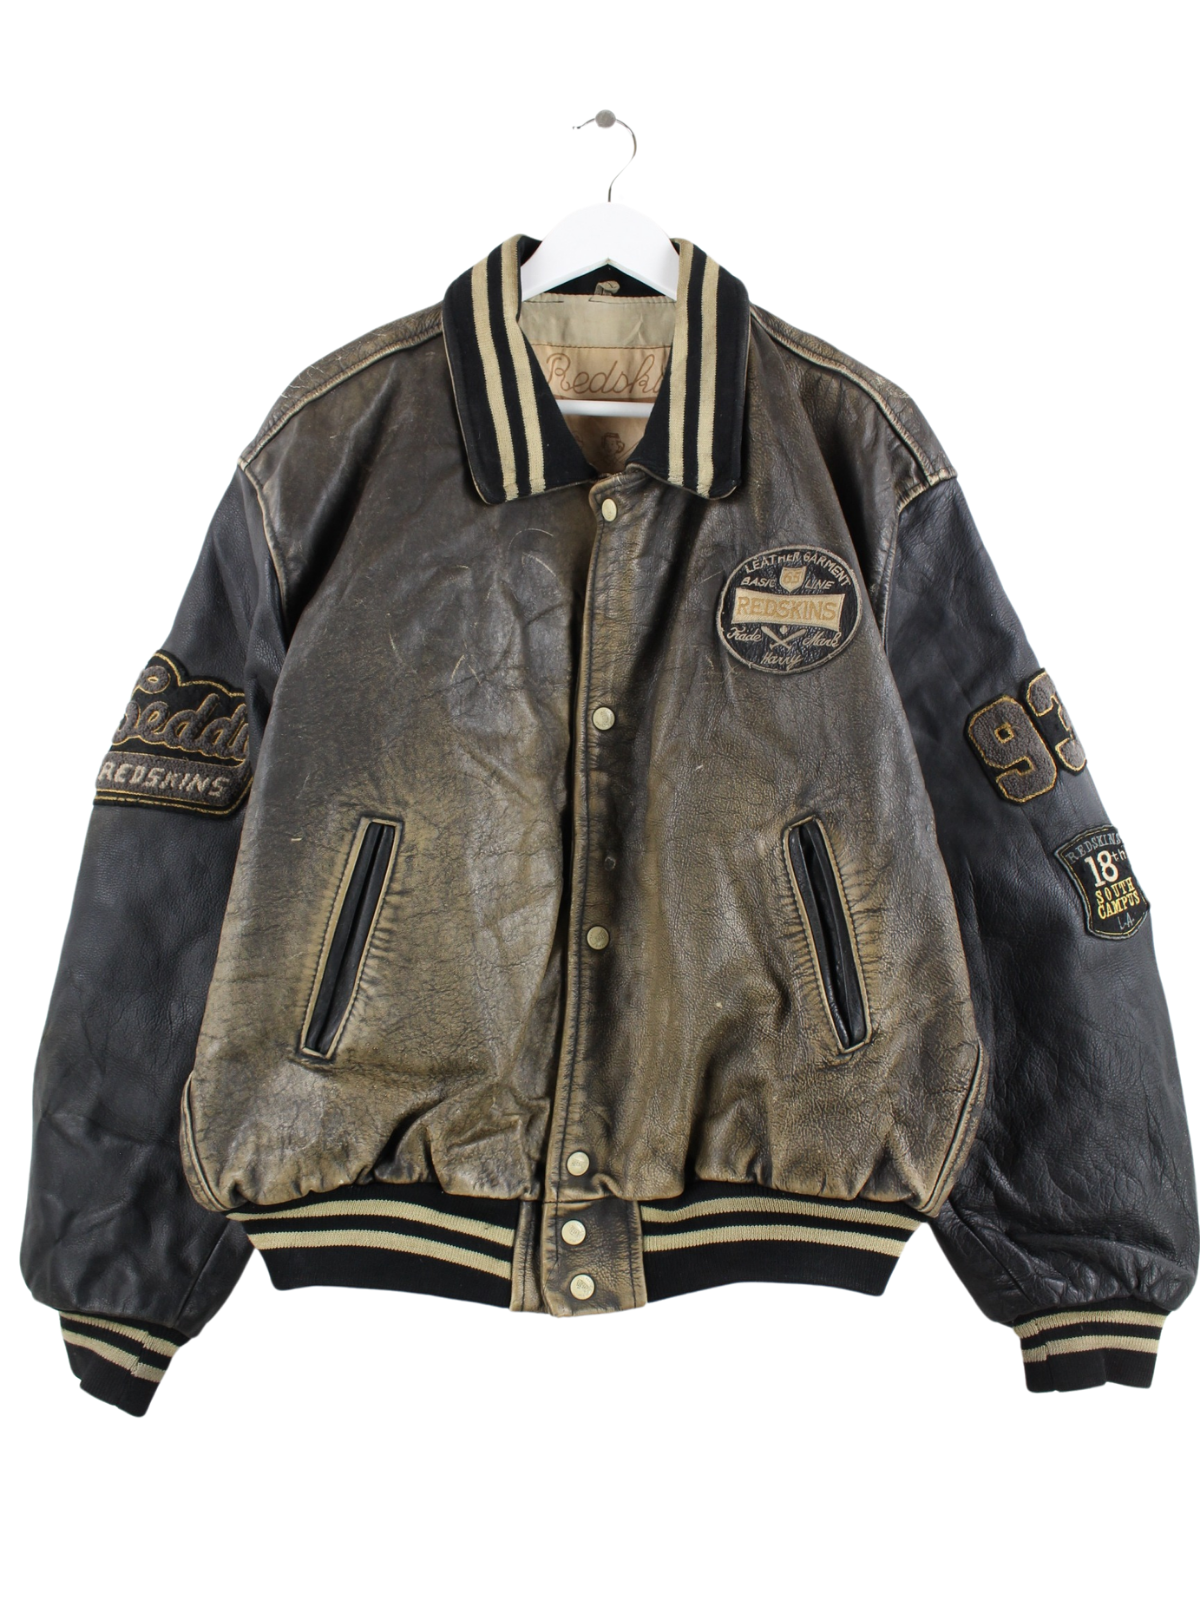 Redskins - Pilot jacket - Size XL - Leather - Catawiki